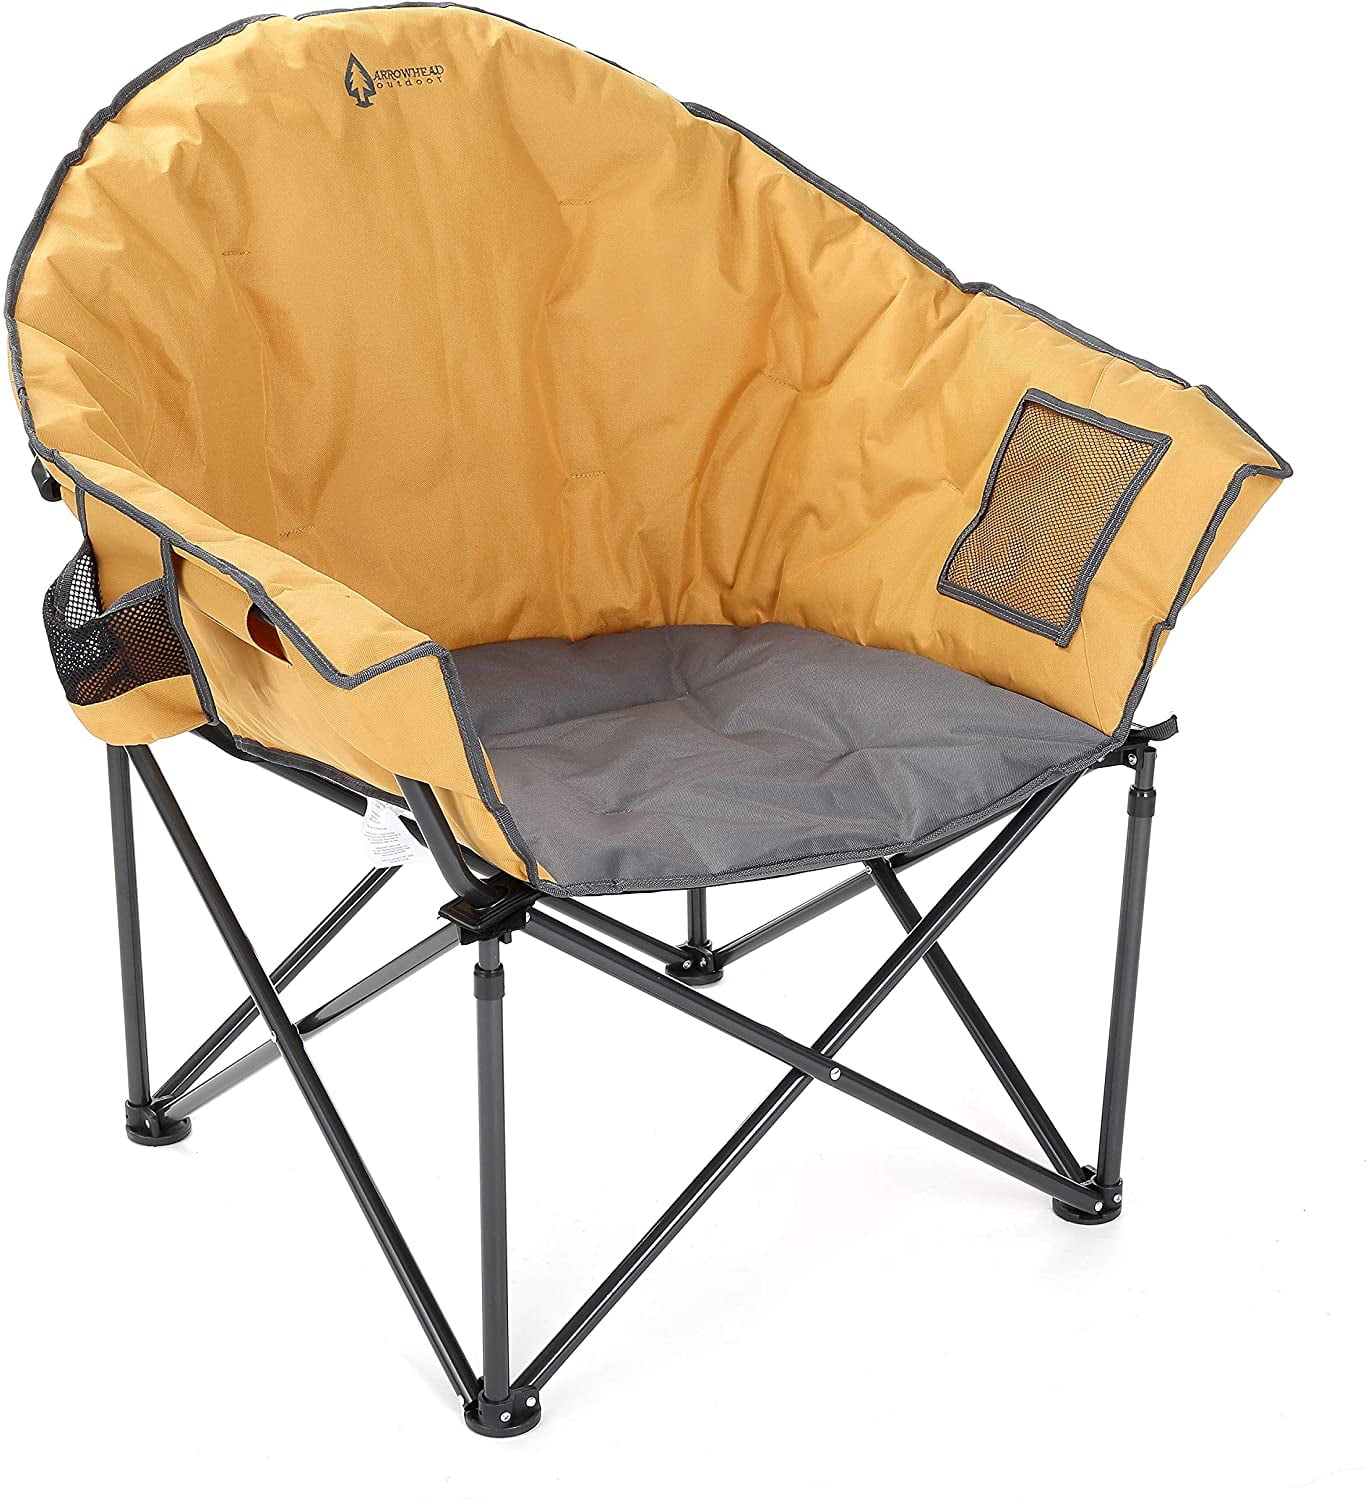 ARROWHEAD OUTDOOR Oversized Heavy-Duty Club Folding Camping Chair w